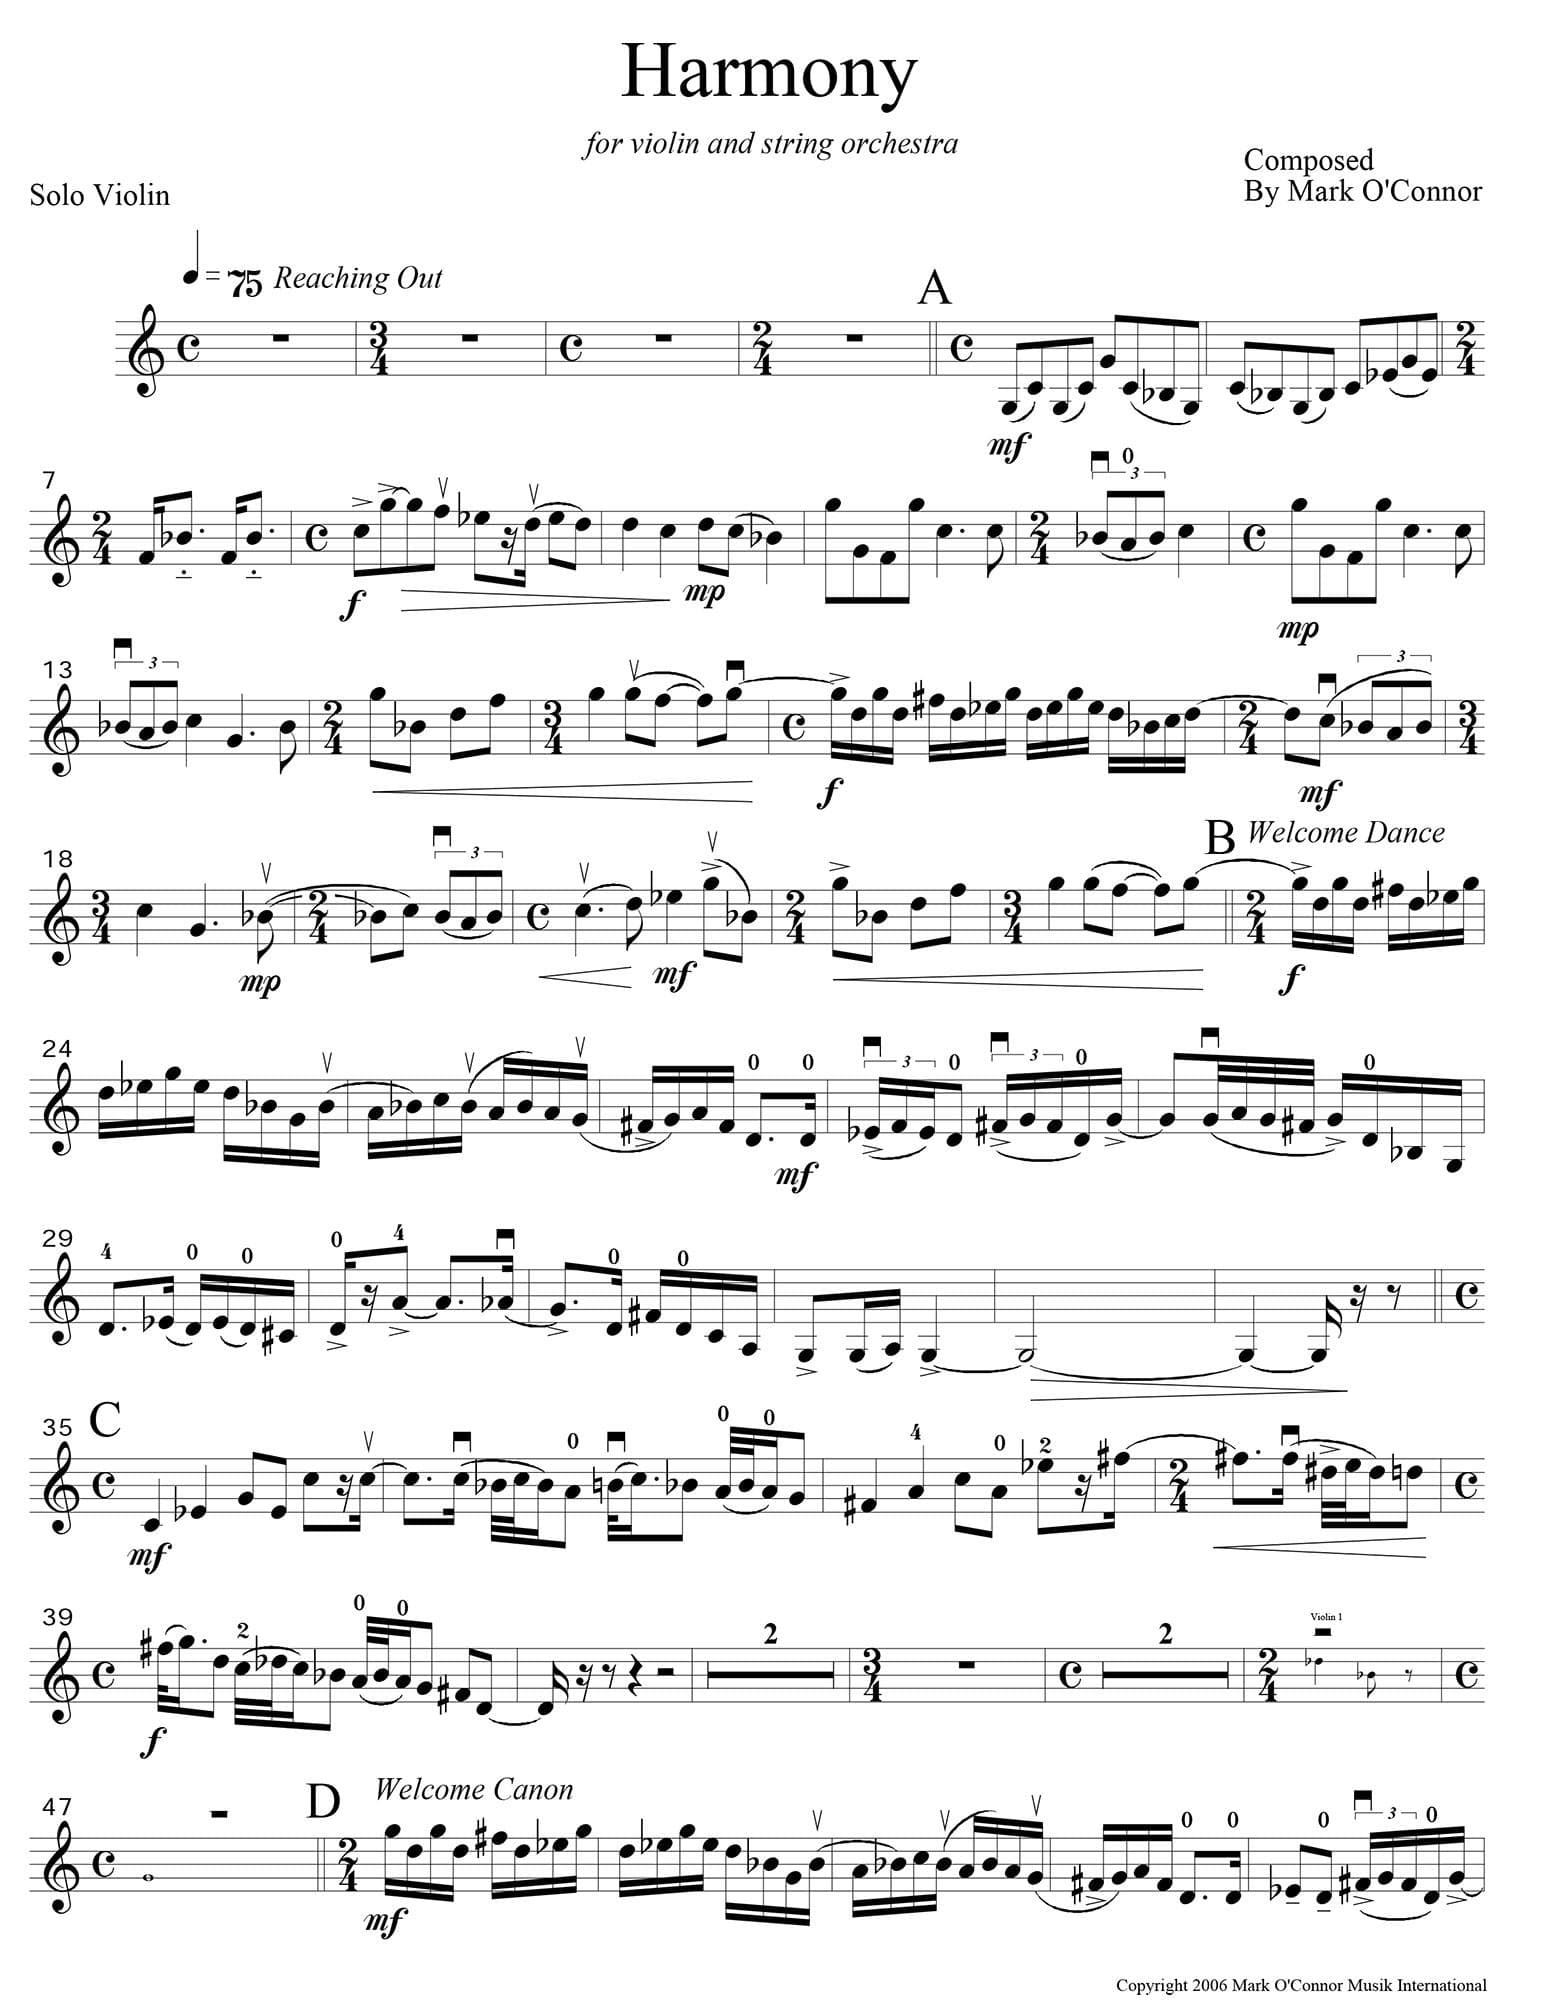 O'Connor, Mark - Harmony for Violin and Strings - Violin Solo - Digital Download